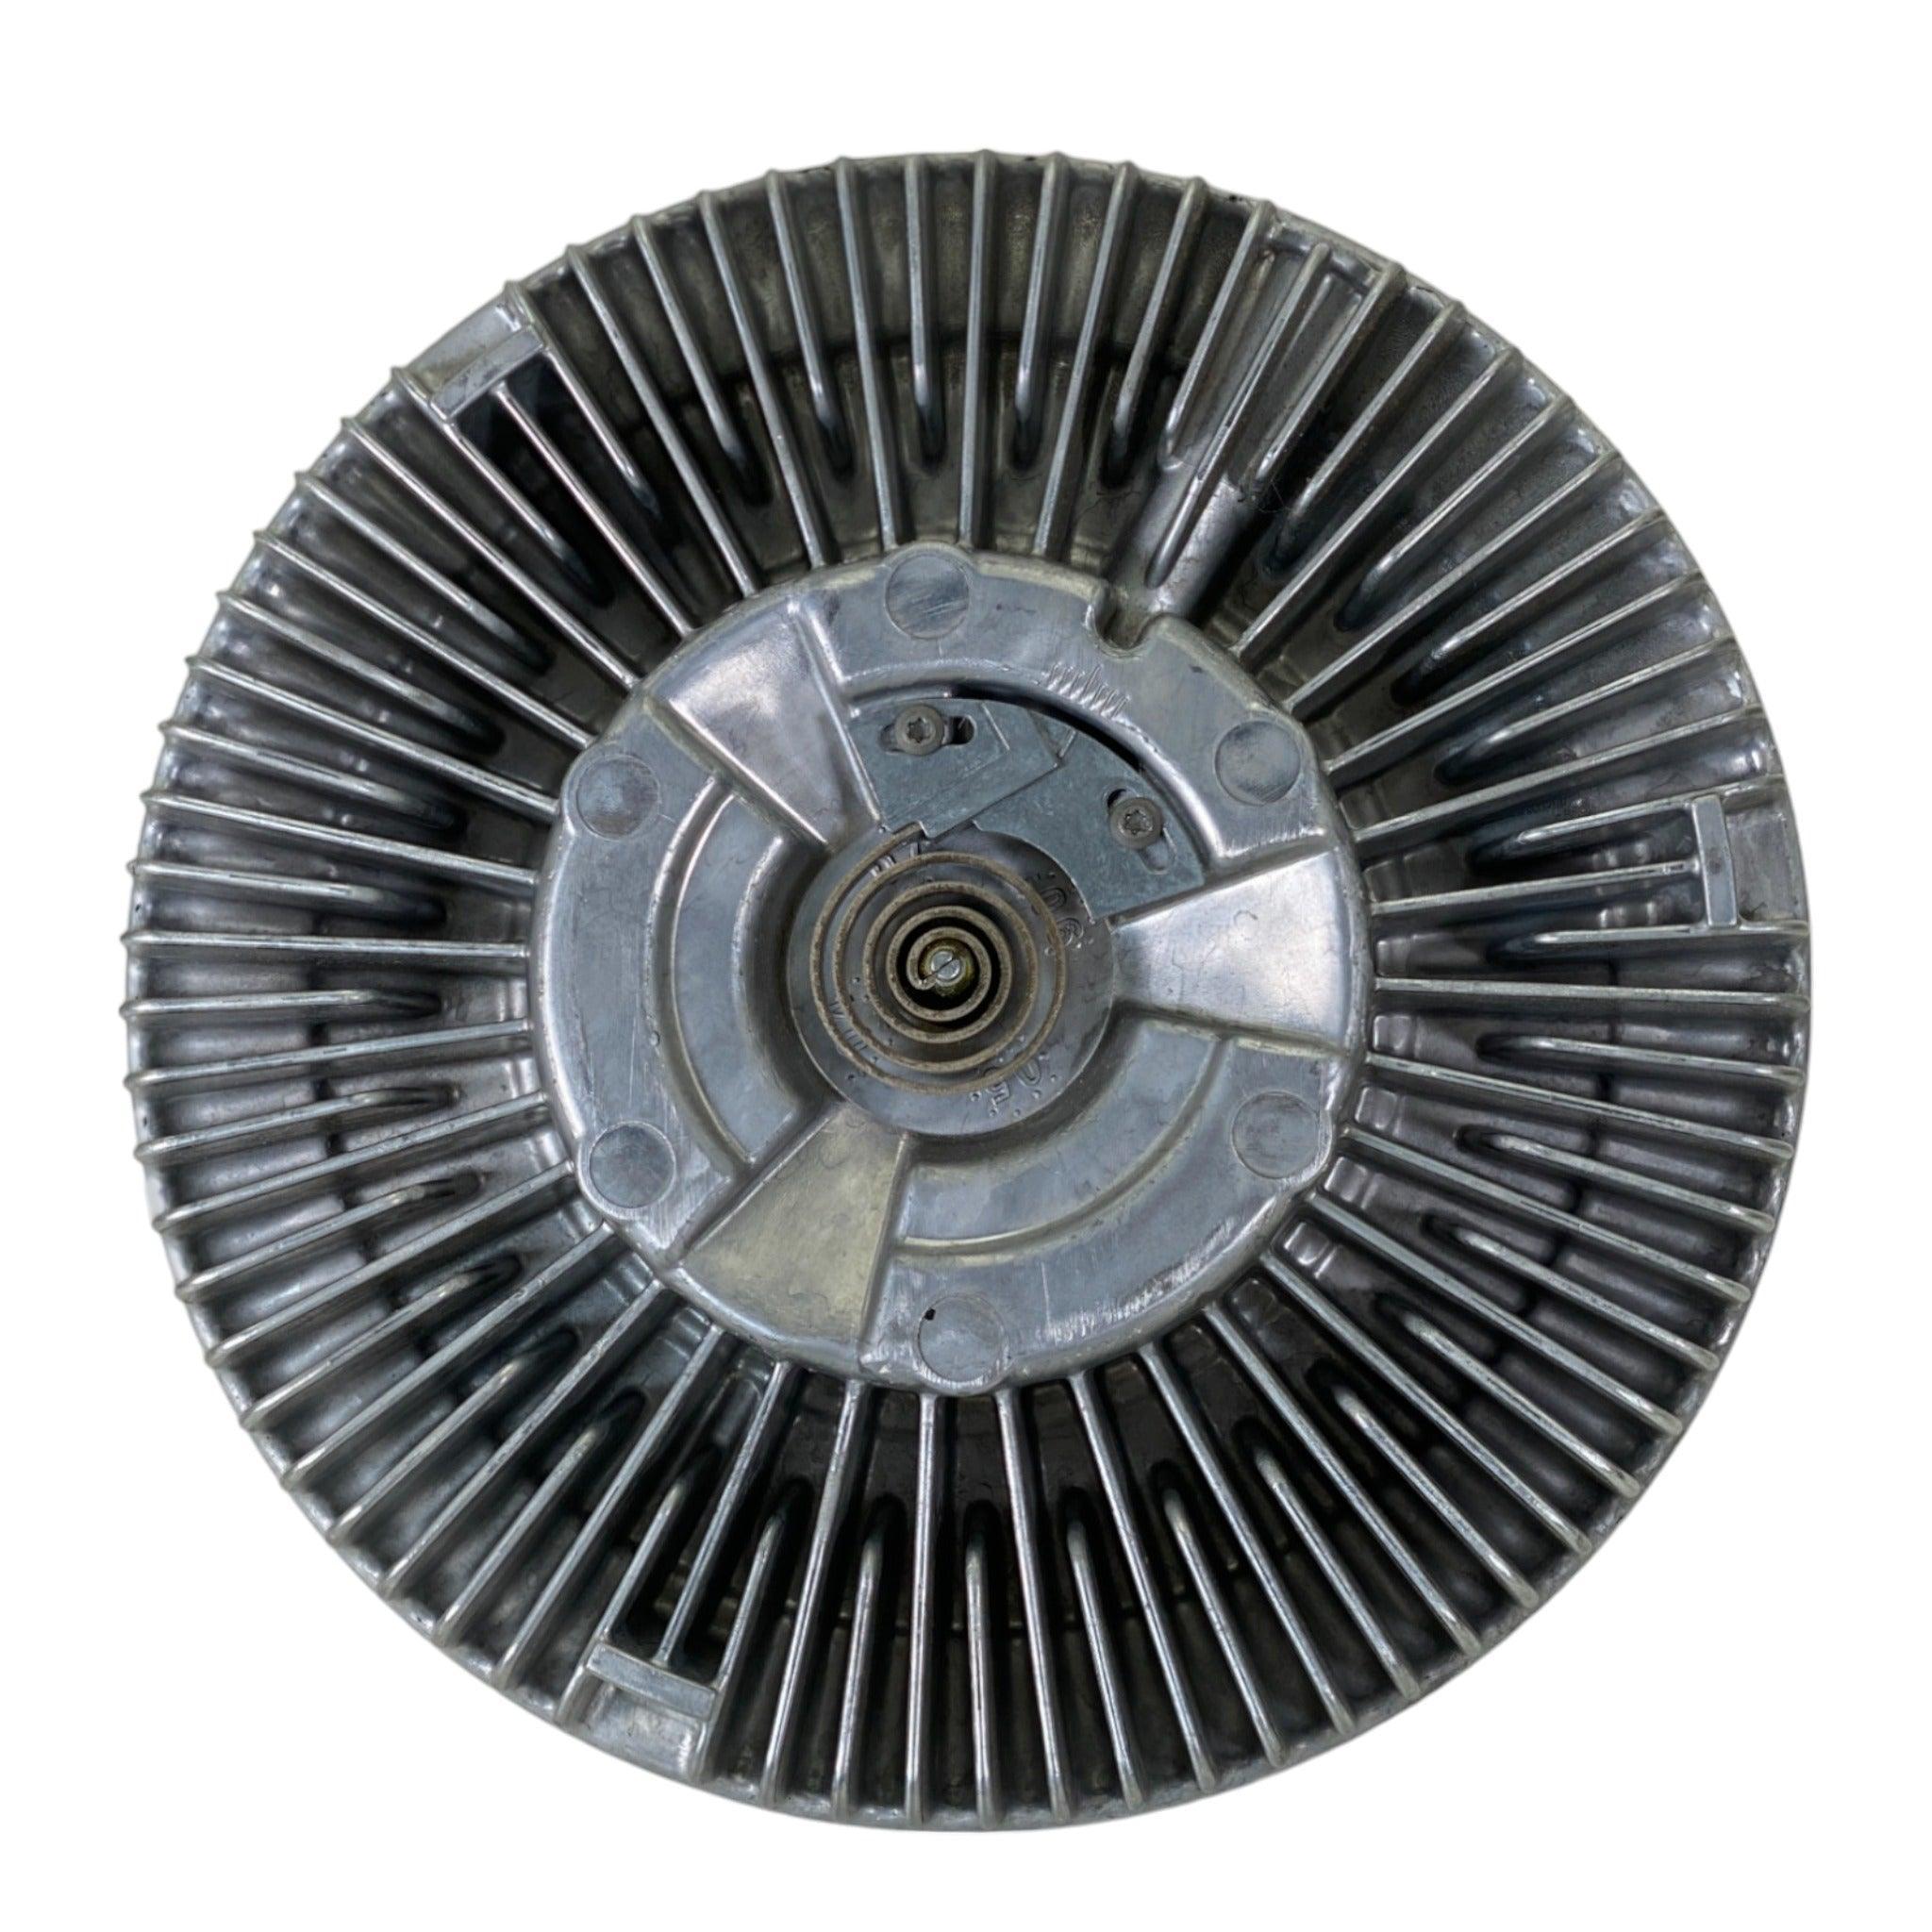 3540985C2 Genuine International Engine Fan Clutch For Dt466 Series Engines - ADVANCED TRUCK PARTS